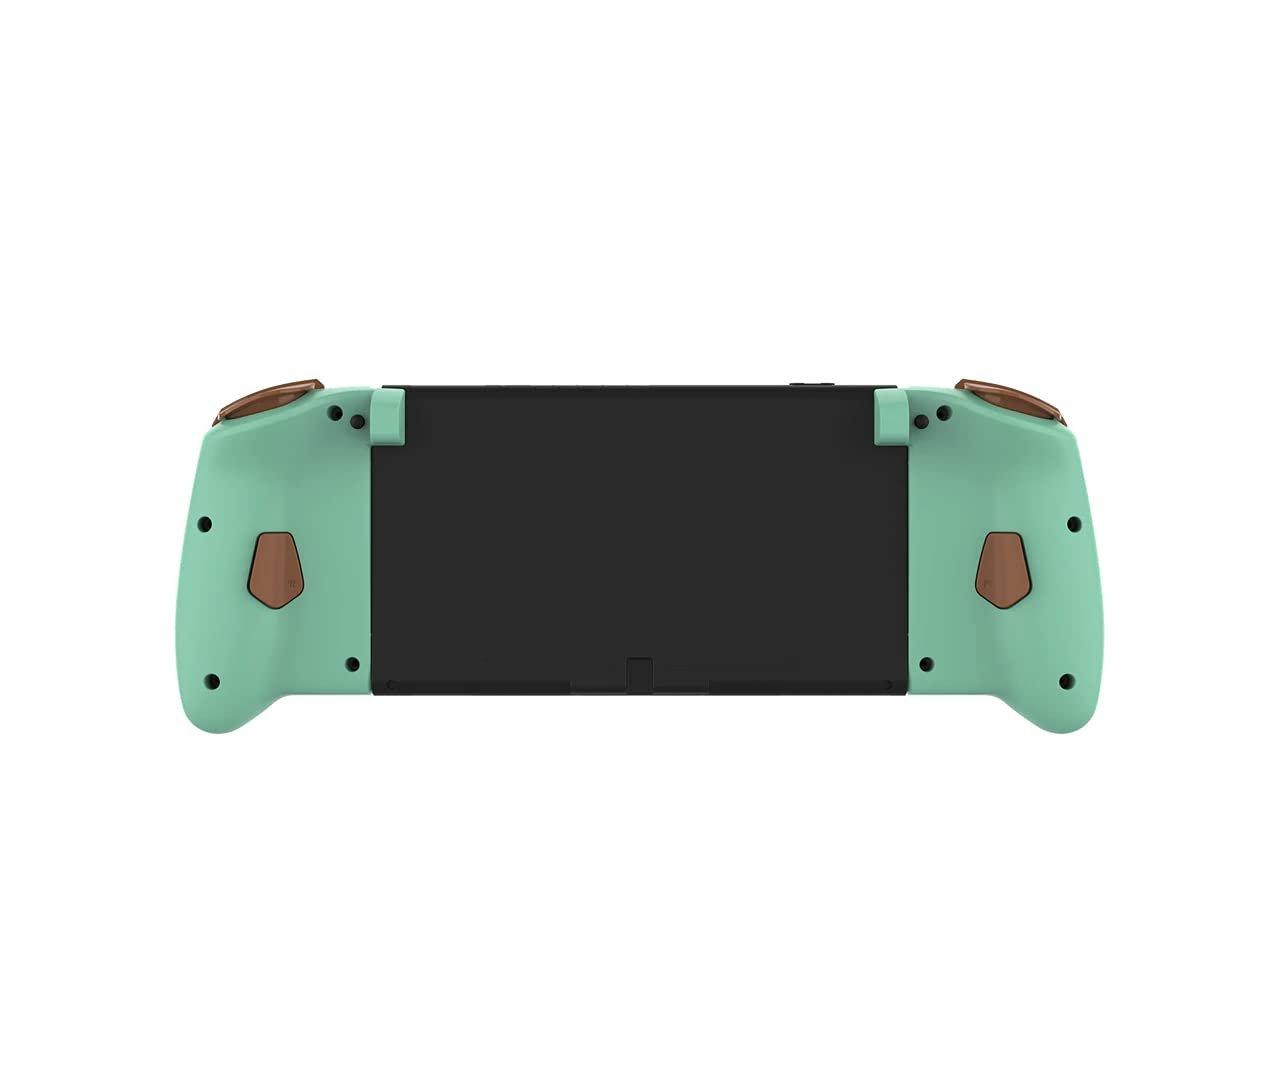 HORI Nintendo Switch Split Pad Pro (Pikachu & Charizard) - Ergonomic  Controller for Handheld Mode - Officially Licensed by Nintendo & Pokémon